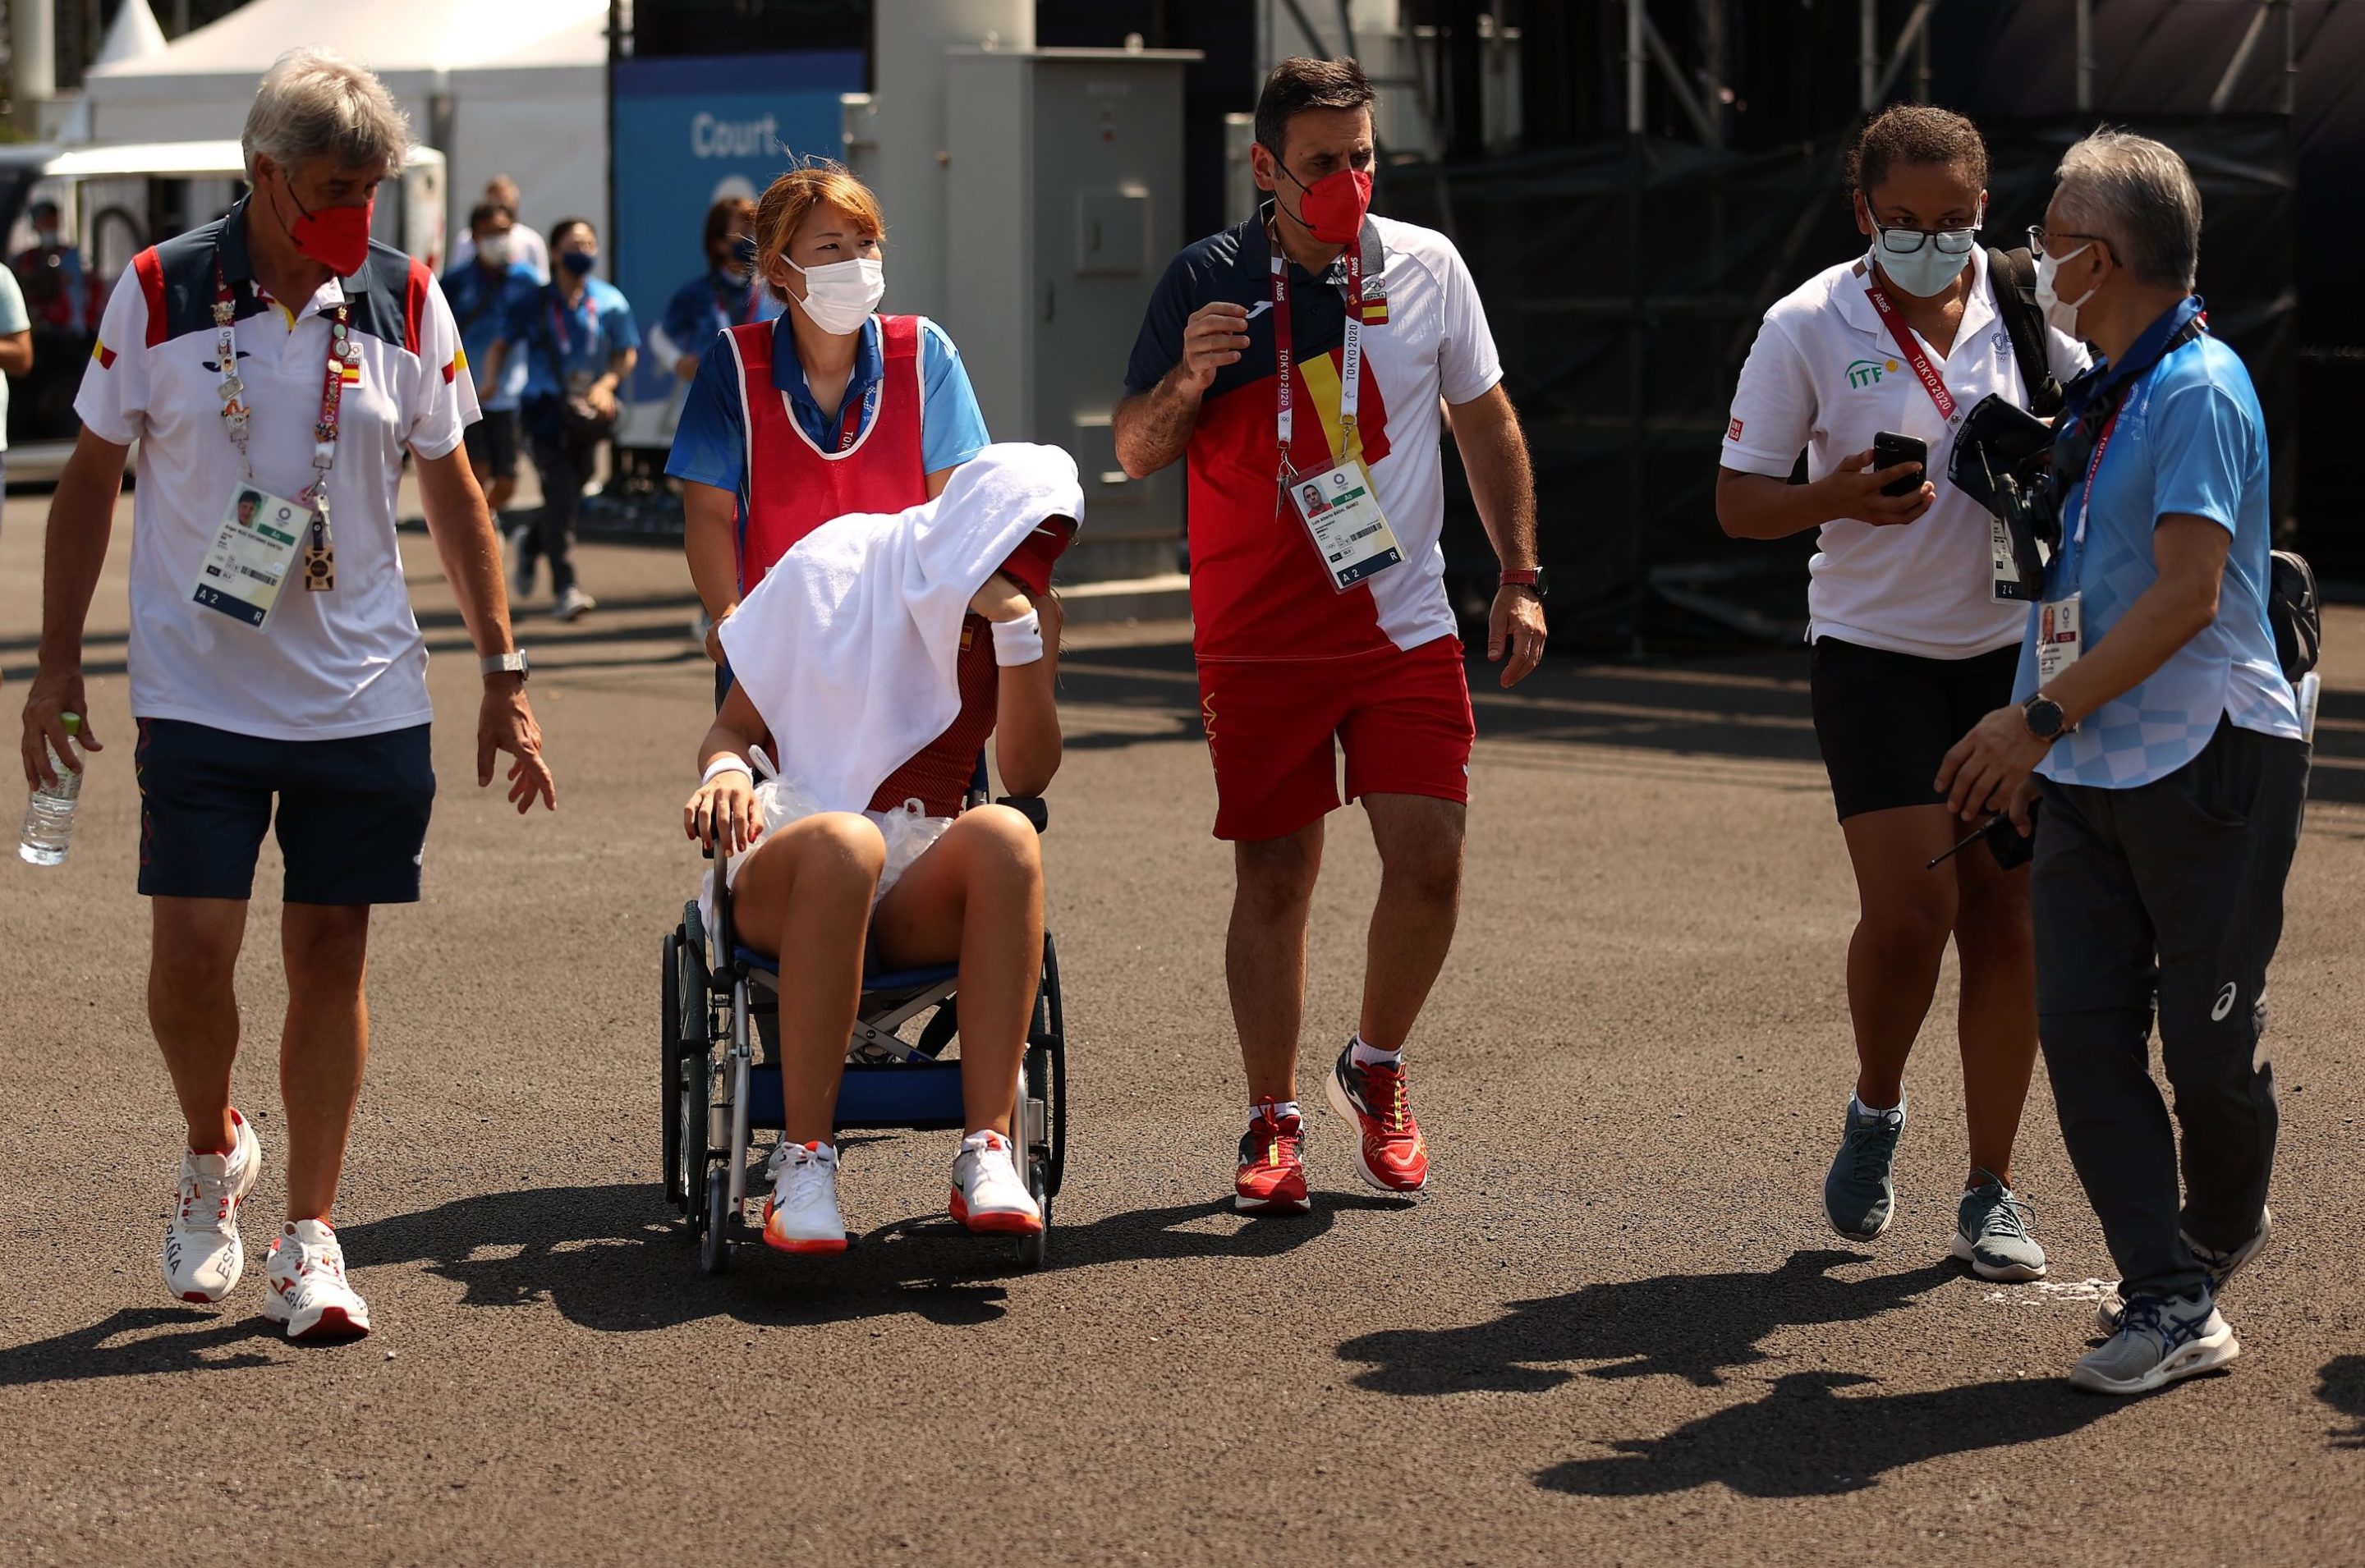 Paula Badosa retires from her quarterfinal match in a wheelchair.